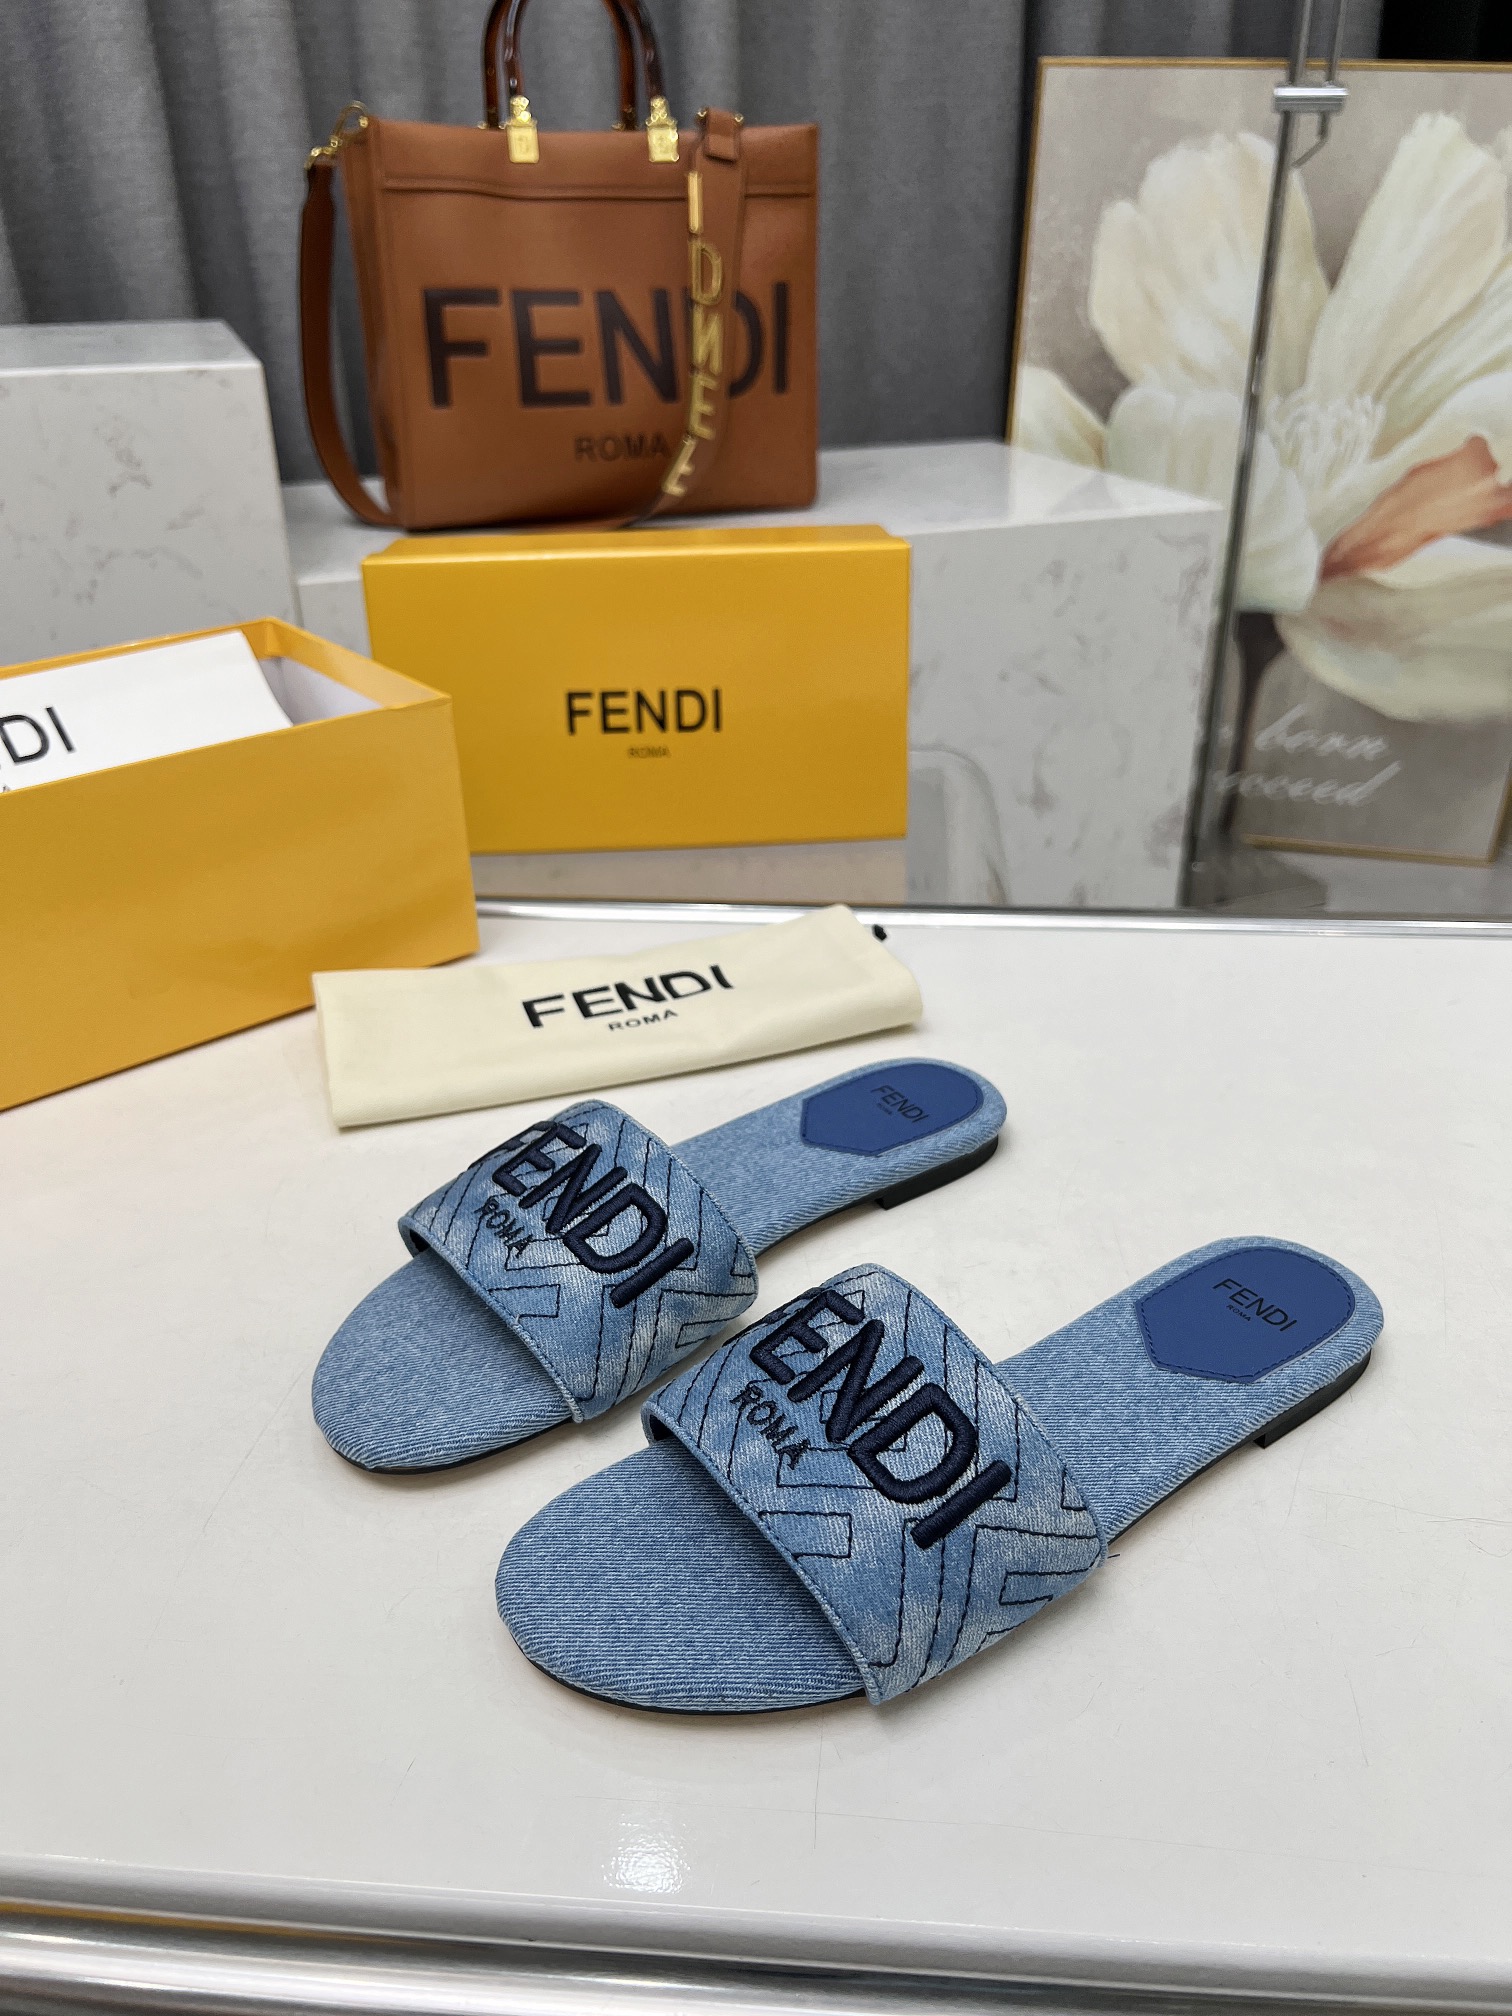 Fendi Shoes Sandals Sheepskin Summer Collection